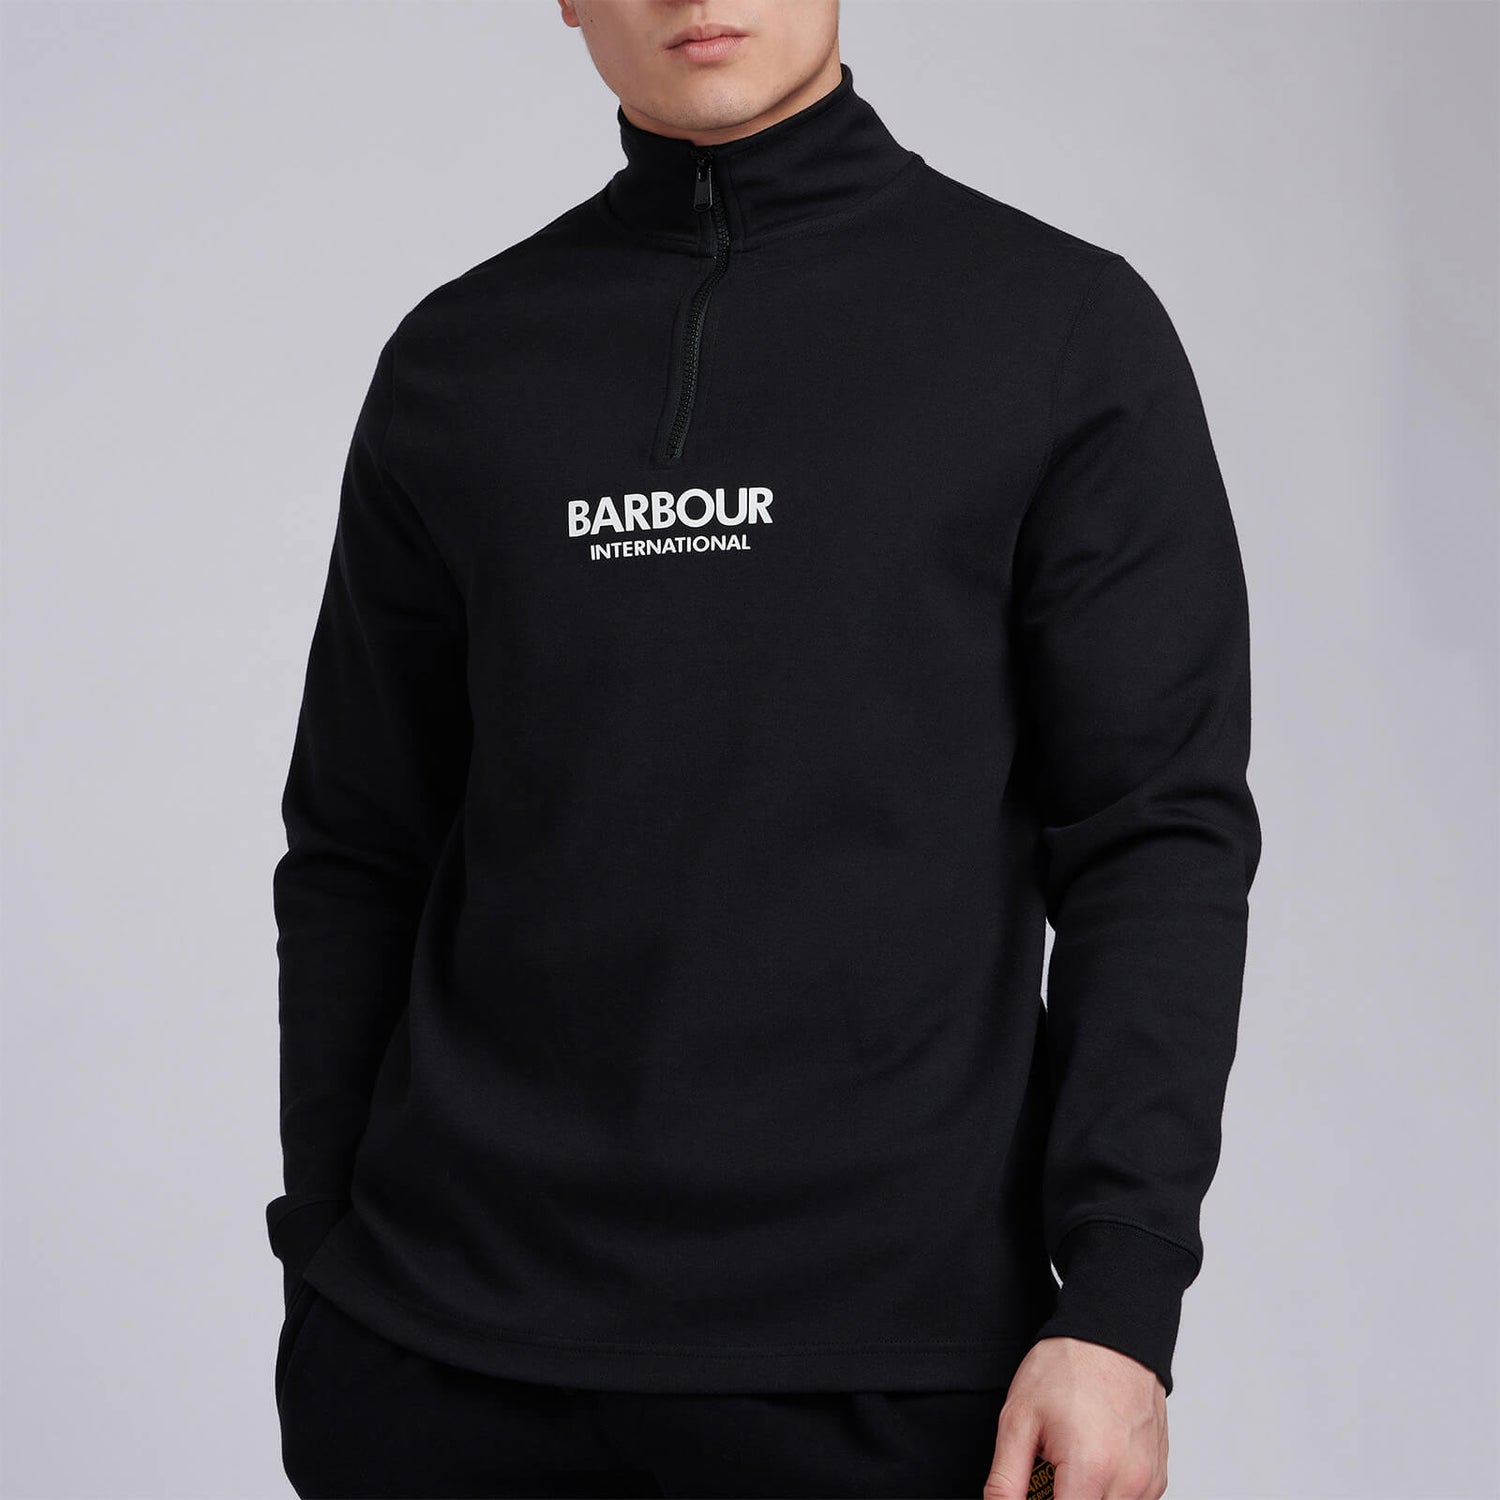 Barbour International Men's Transmission Half-Zip Sweatshirt - Black